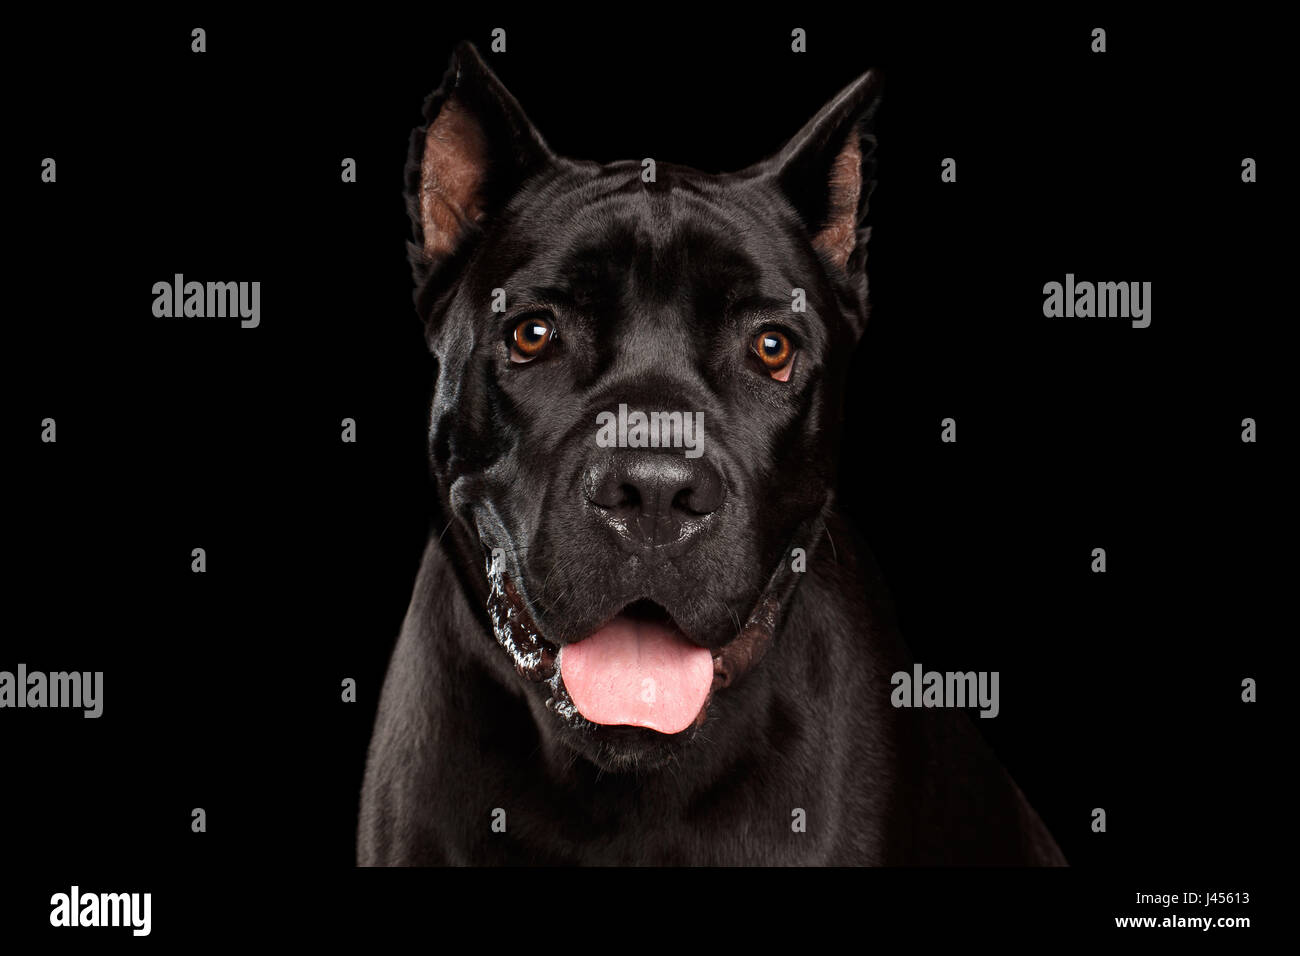 Closeup retrato de hermosa negro perro corso de caña. Foto de estudio aislado sobre fondo negro Foto de stock